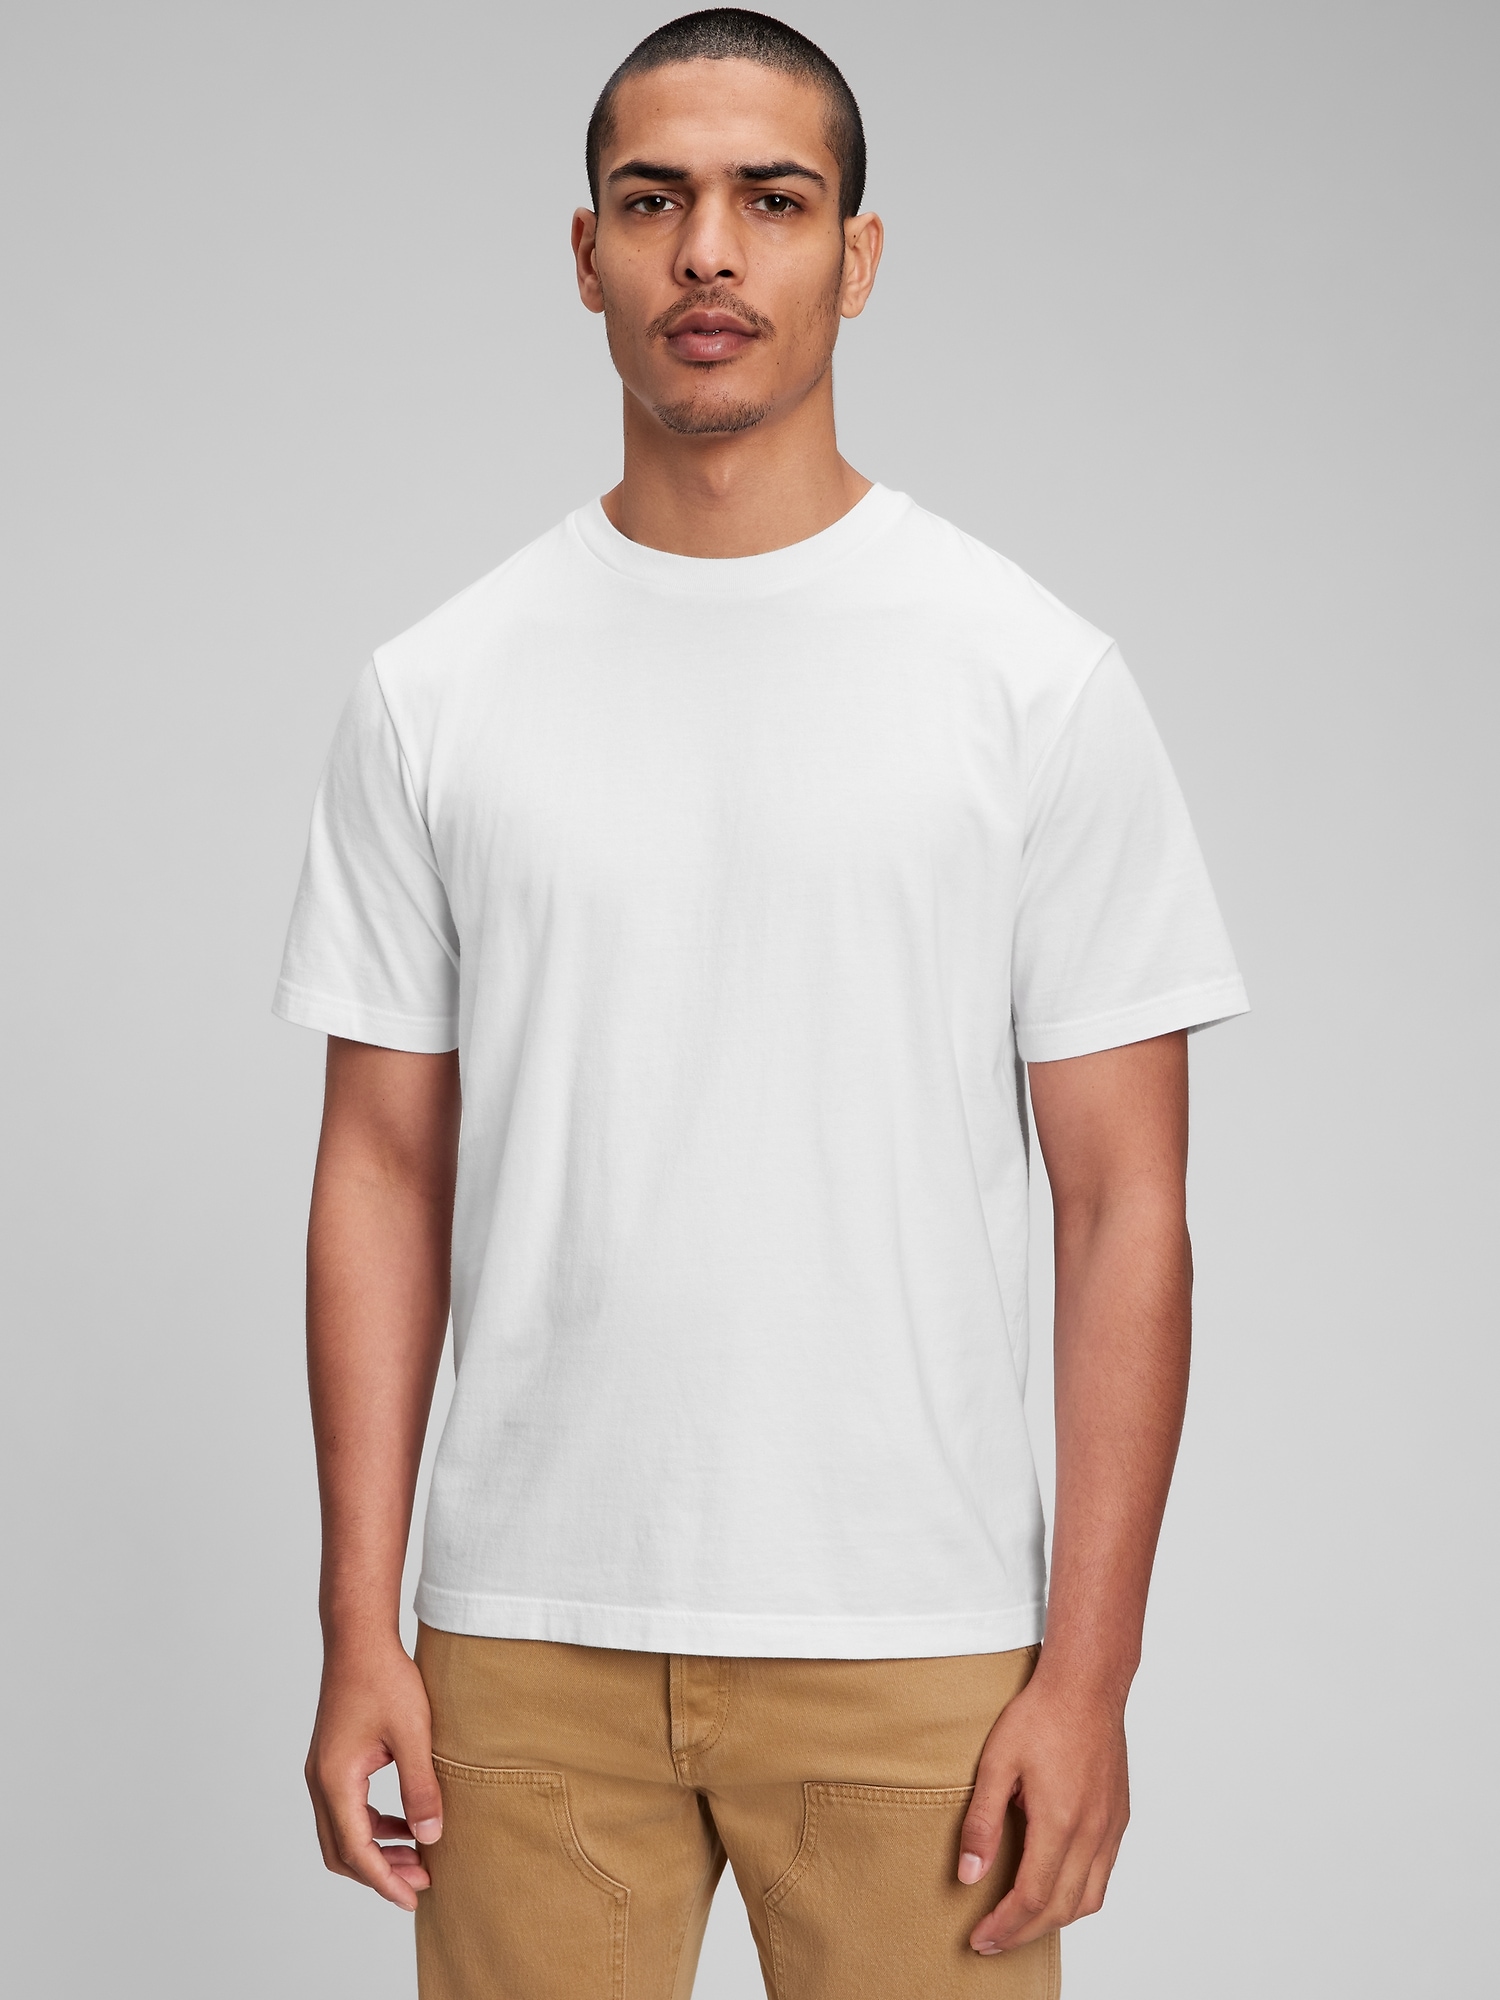 Gap Original T-Shirt white. 1